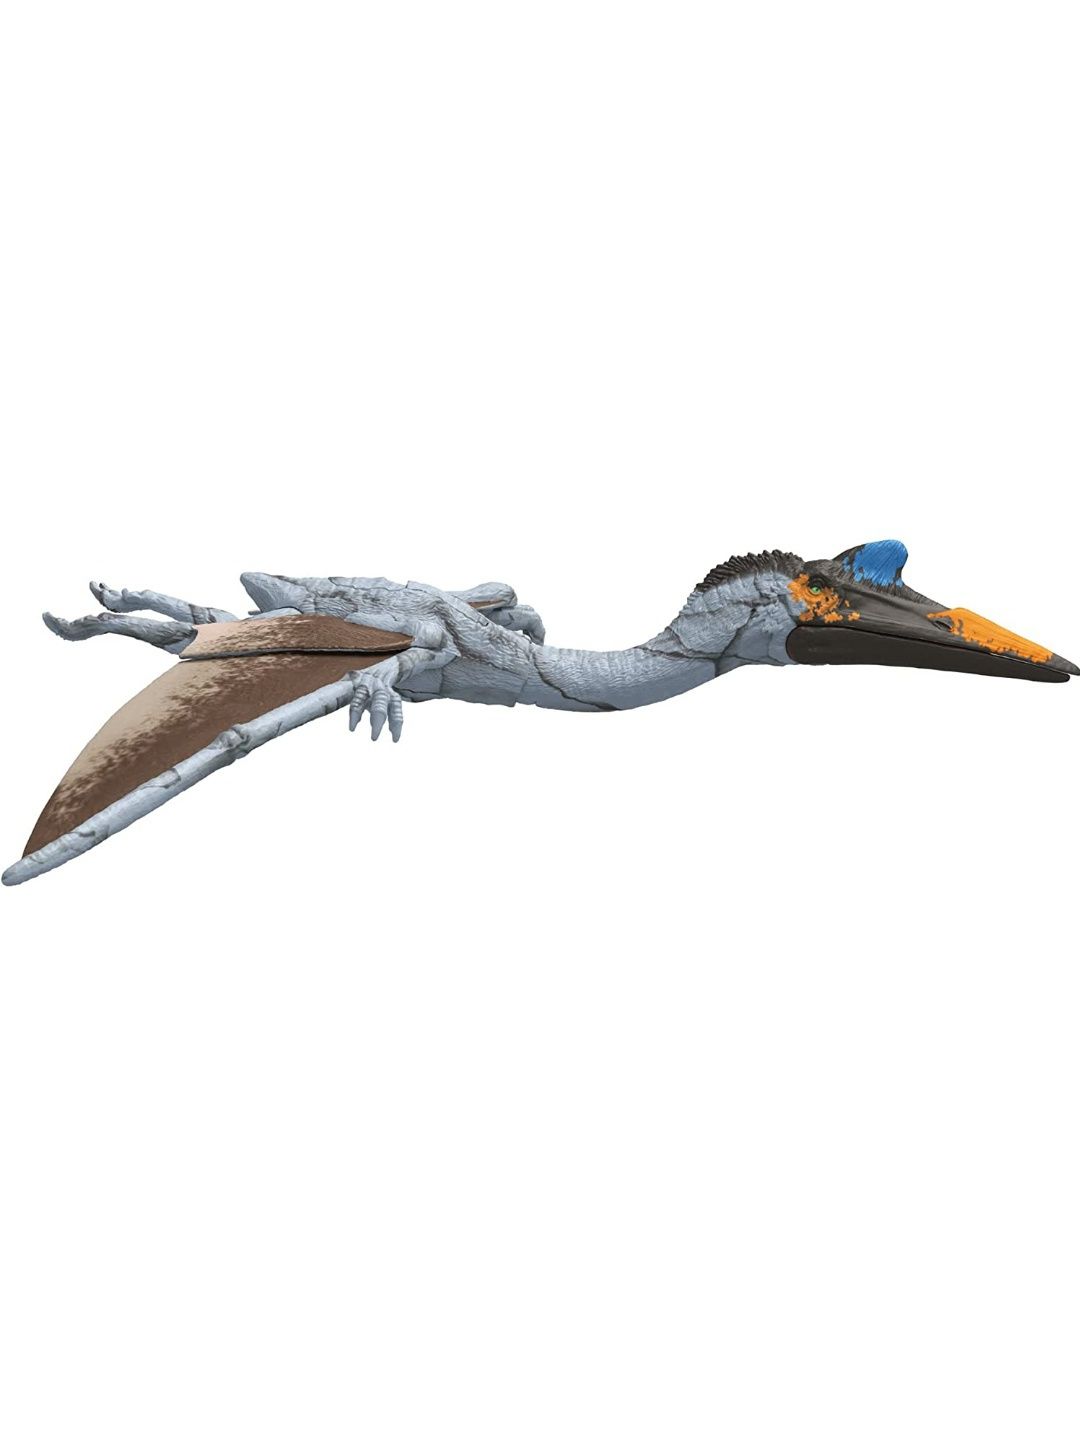 Quetzalcoatlus

Jurassic world dinosaur динозавр оригінал